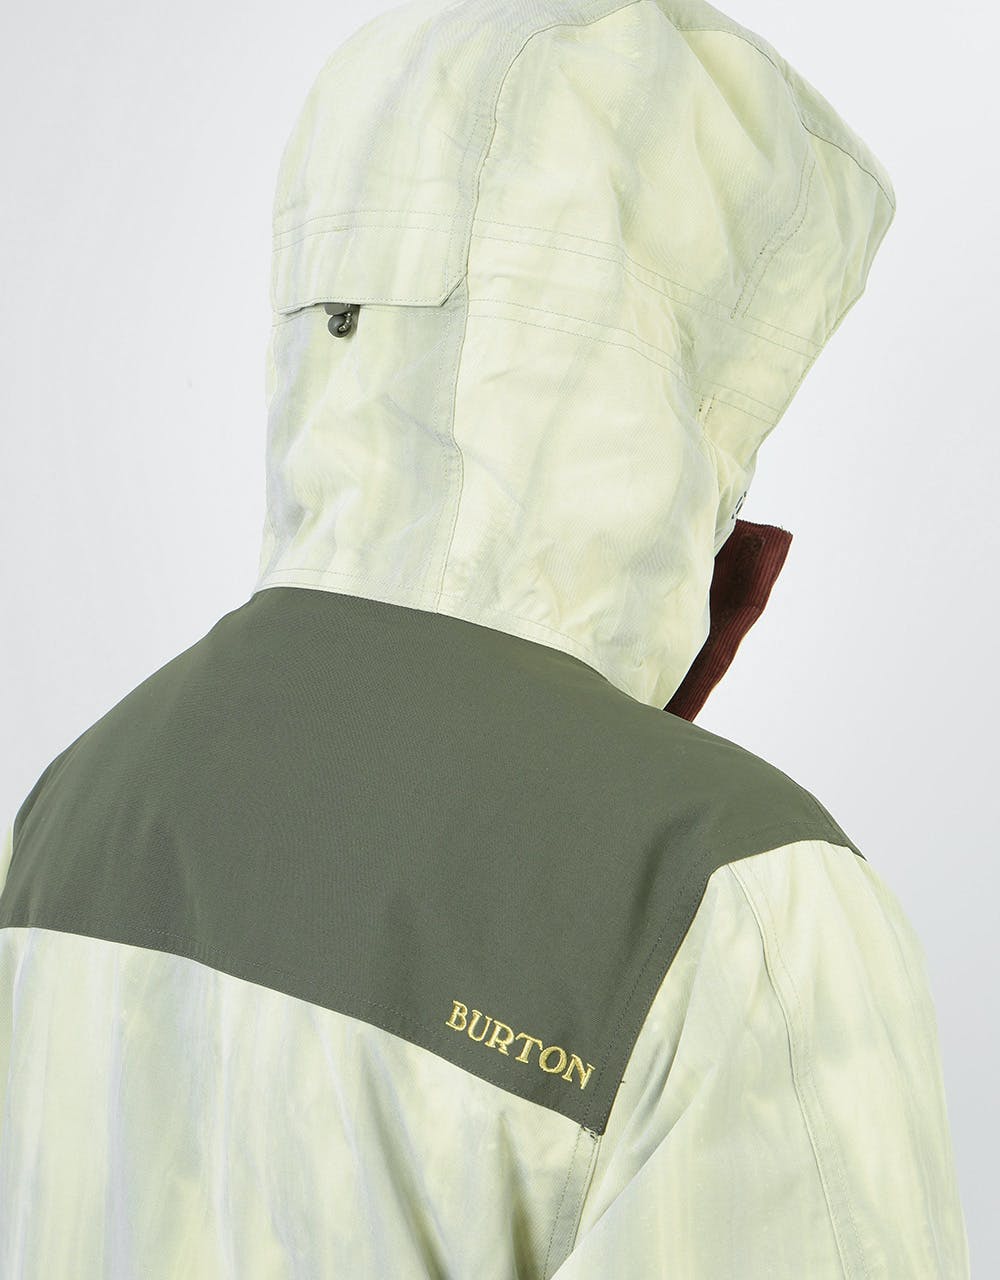 Burton Cloudlifter Snowboard Jacket - Mosstone Distress/Forest